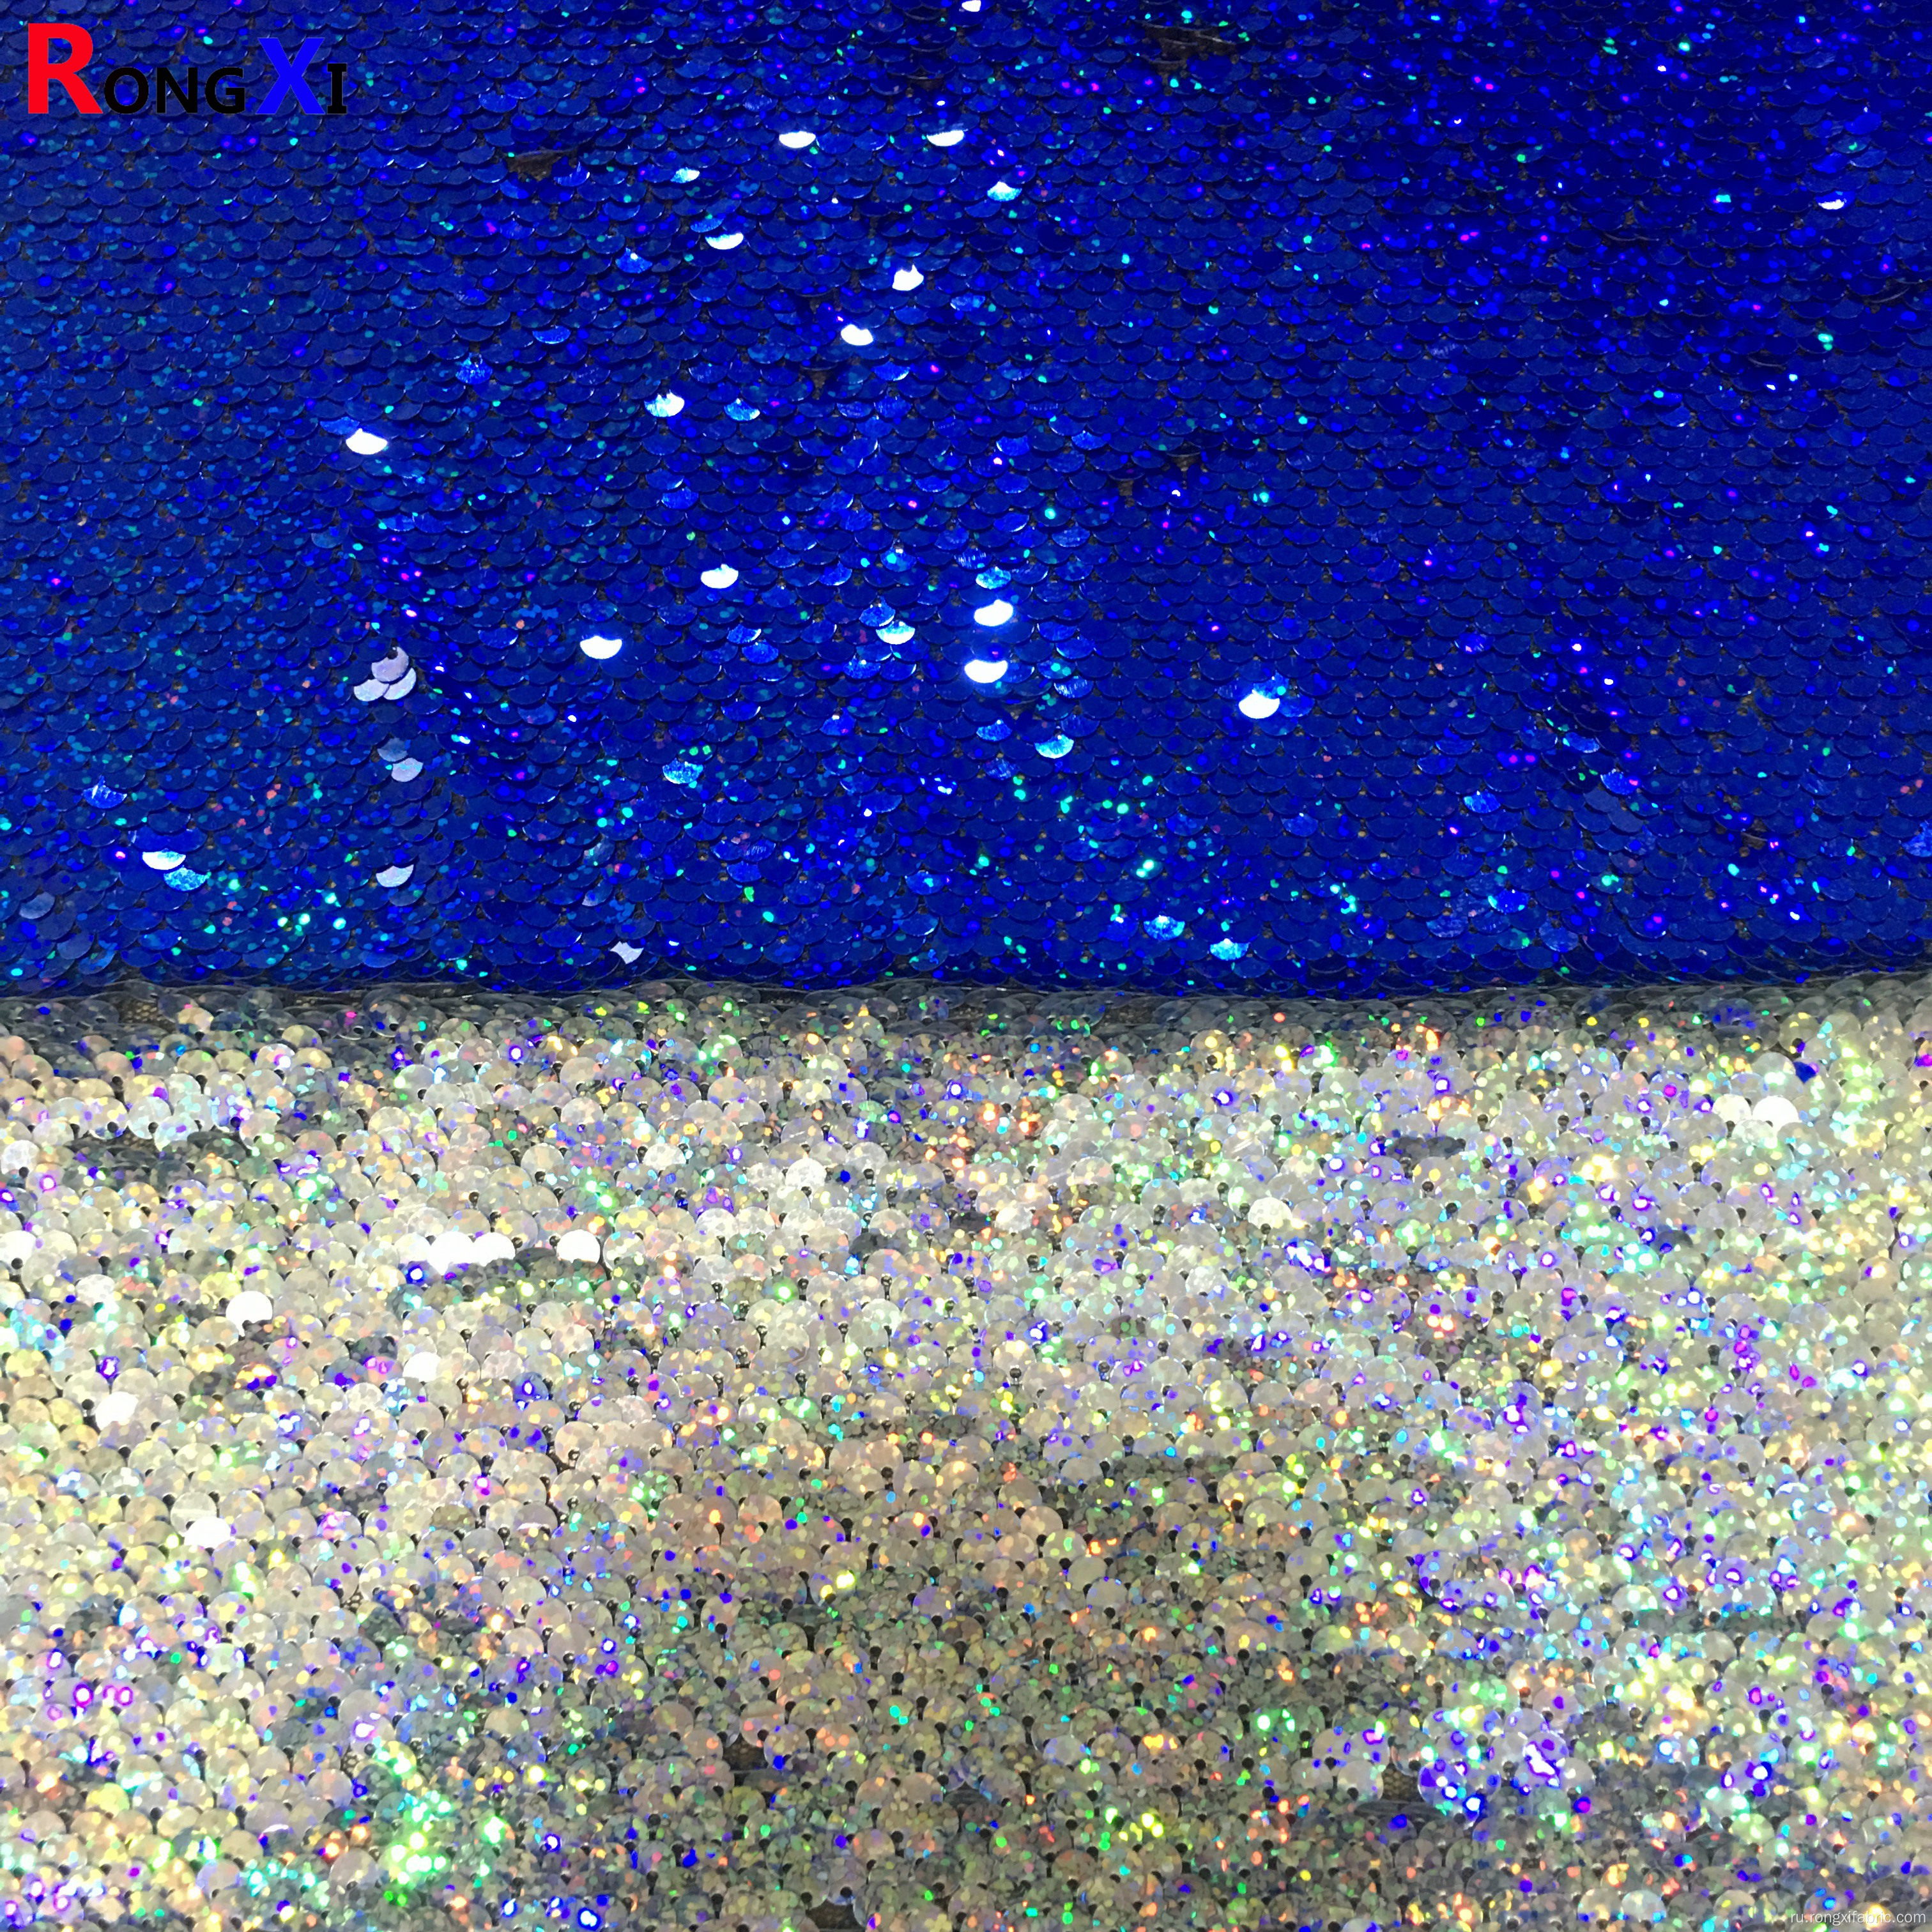 Ткань с пайетками 5 мм Dream laser bling темно-синего цвета